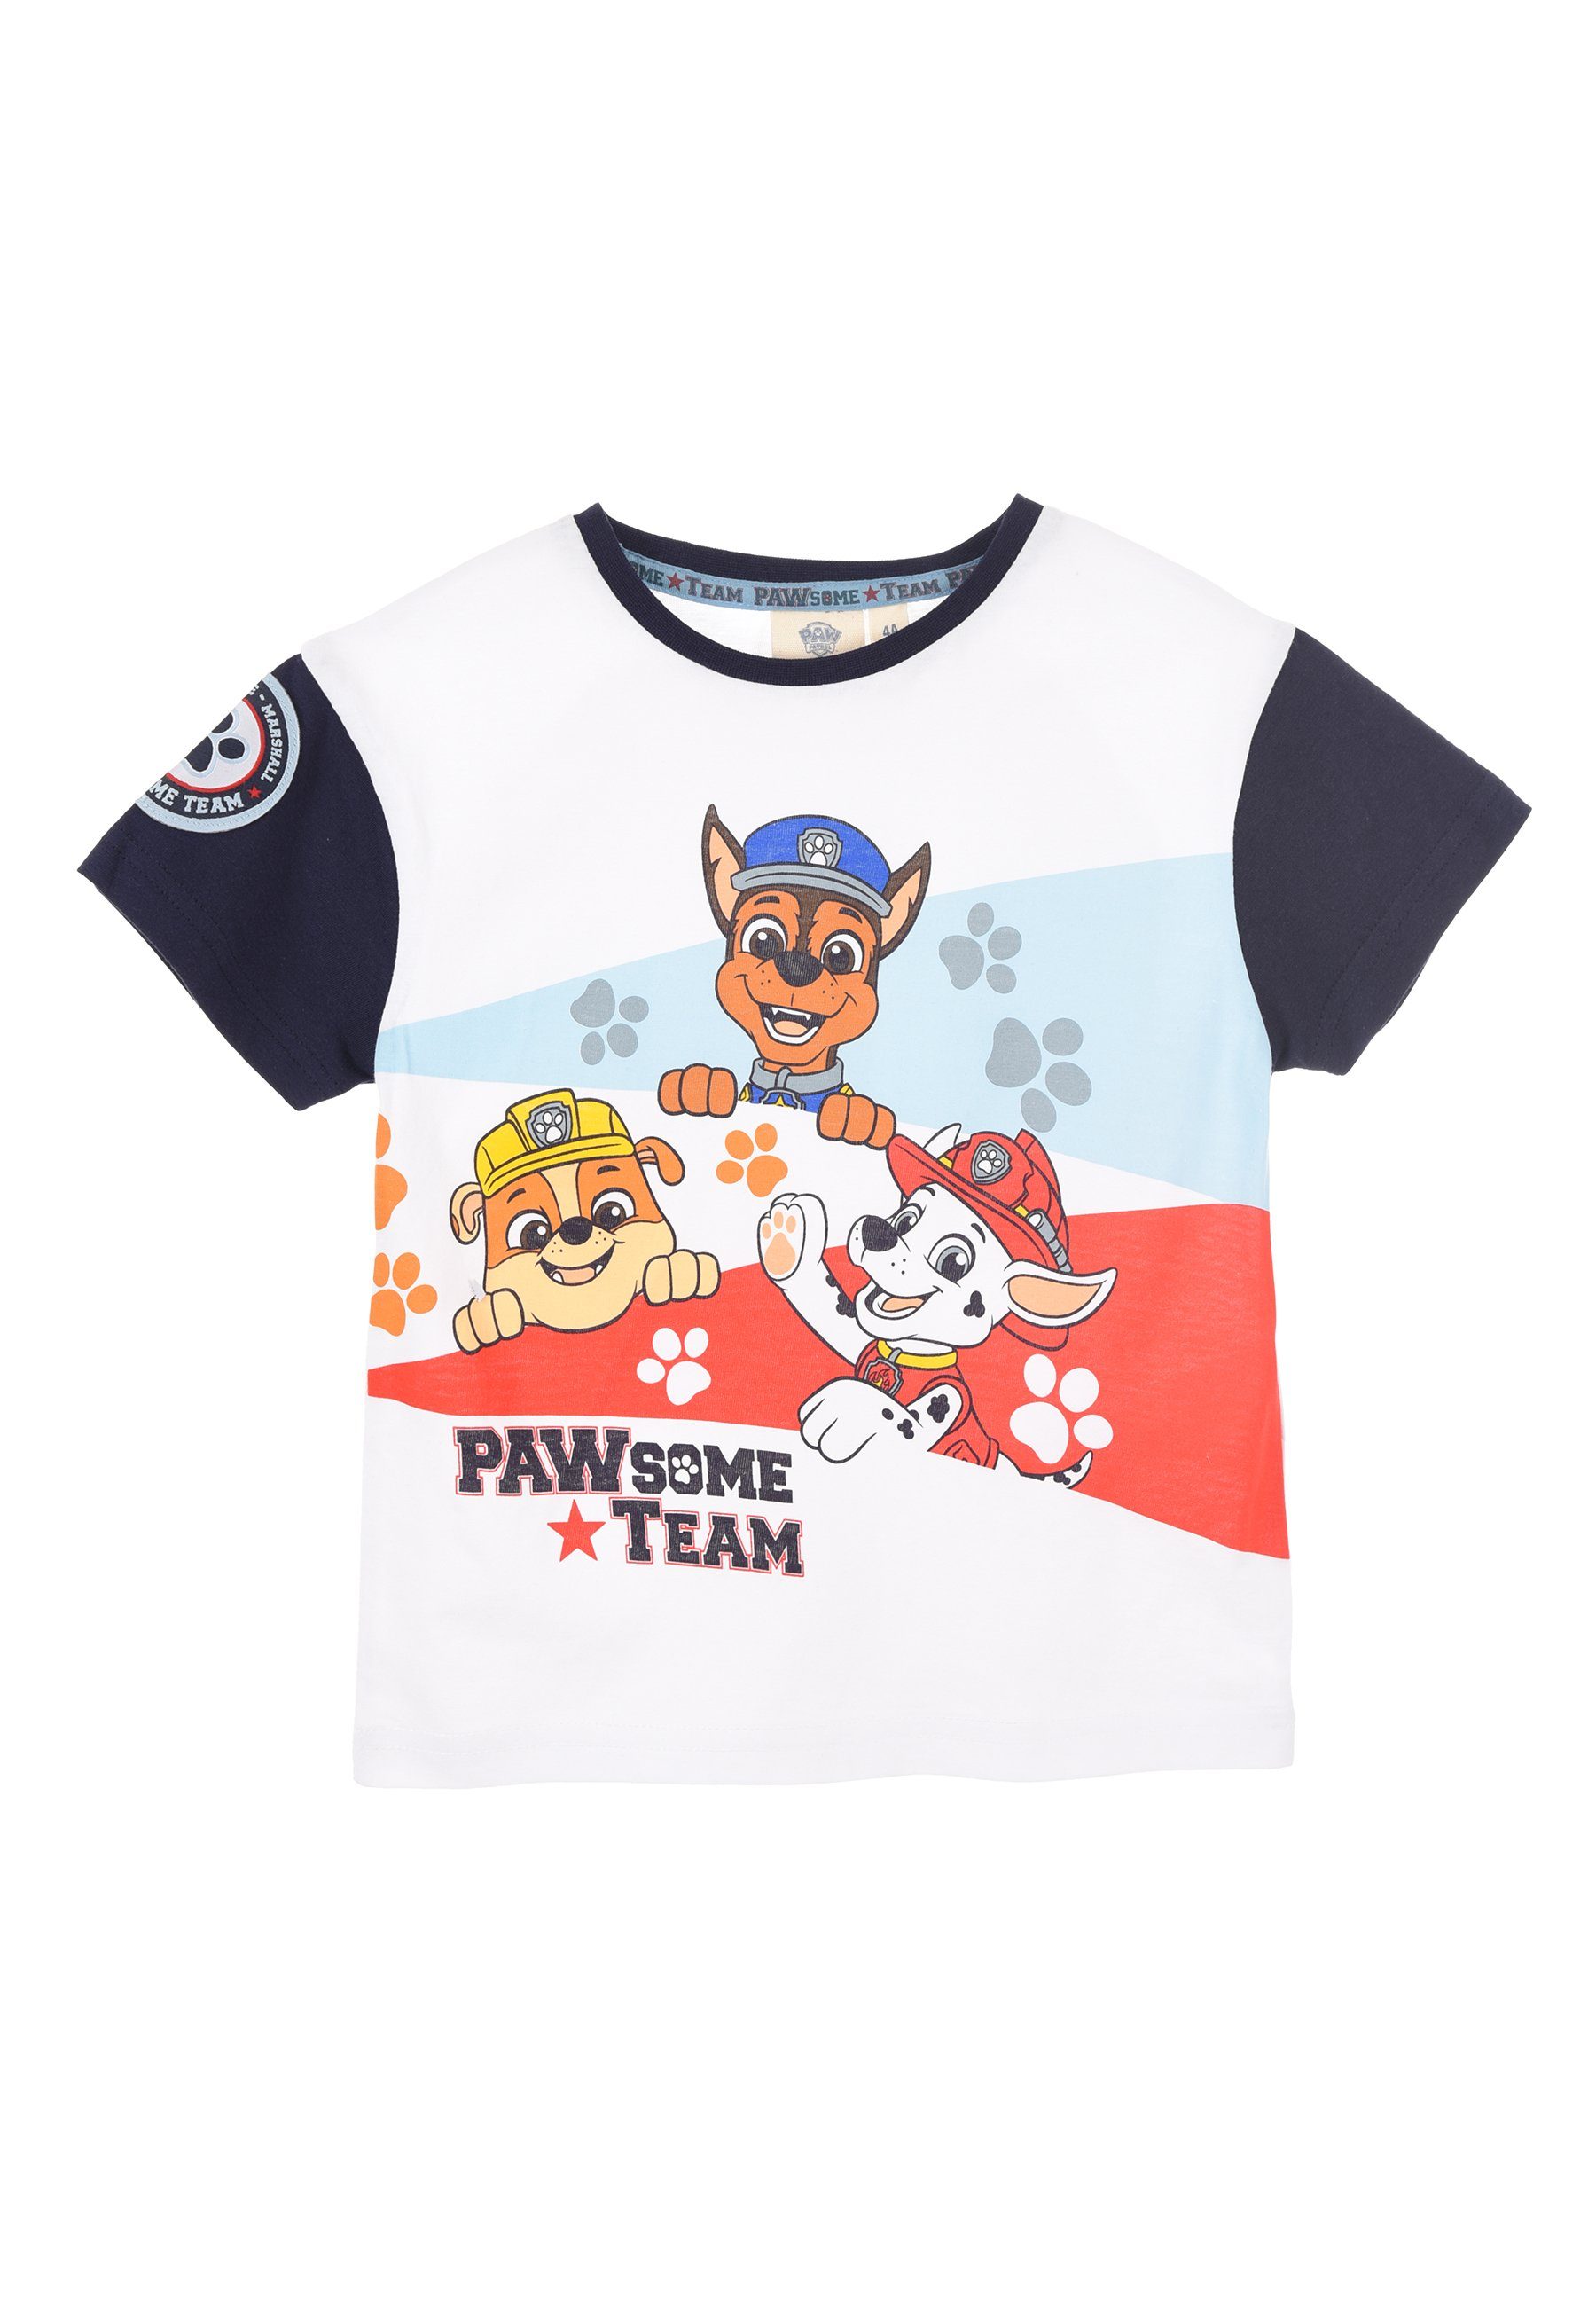 PAW PATROL T-Shirt Chase Marshall Rubble Kinder Jungen T-Shirt Oberteil Blau